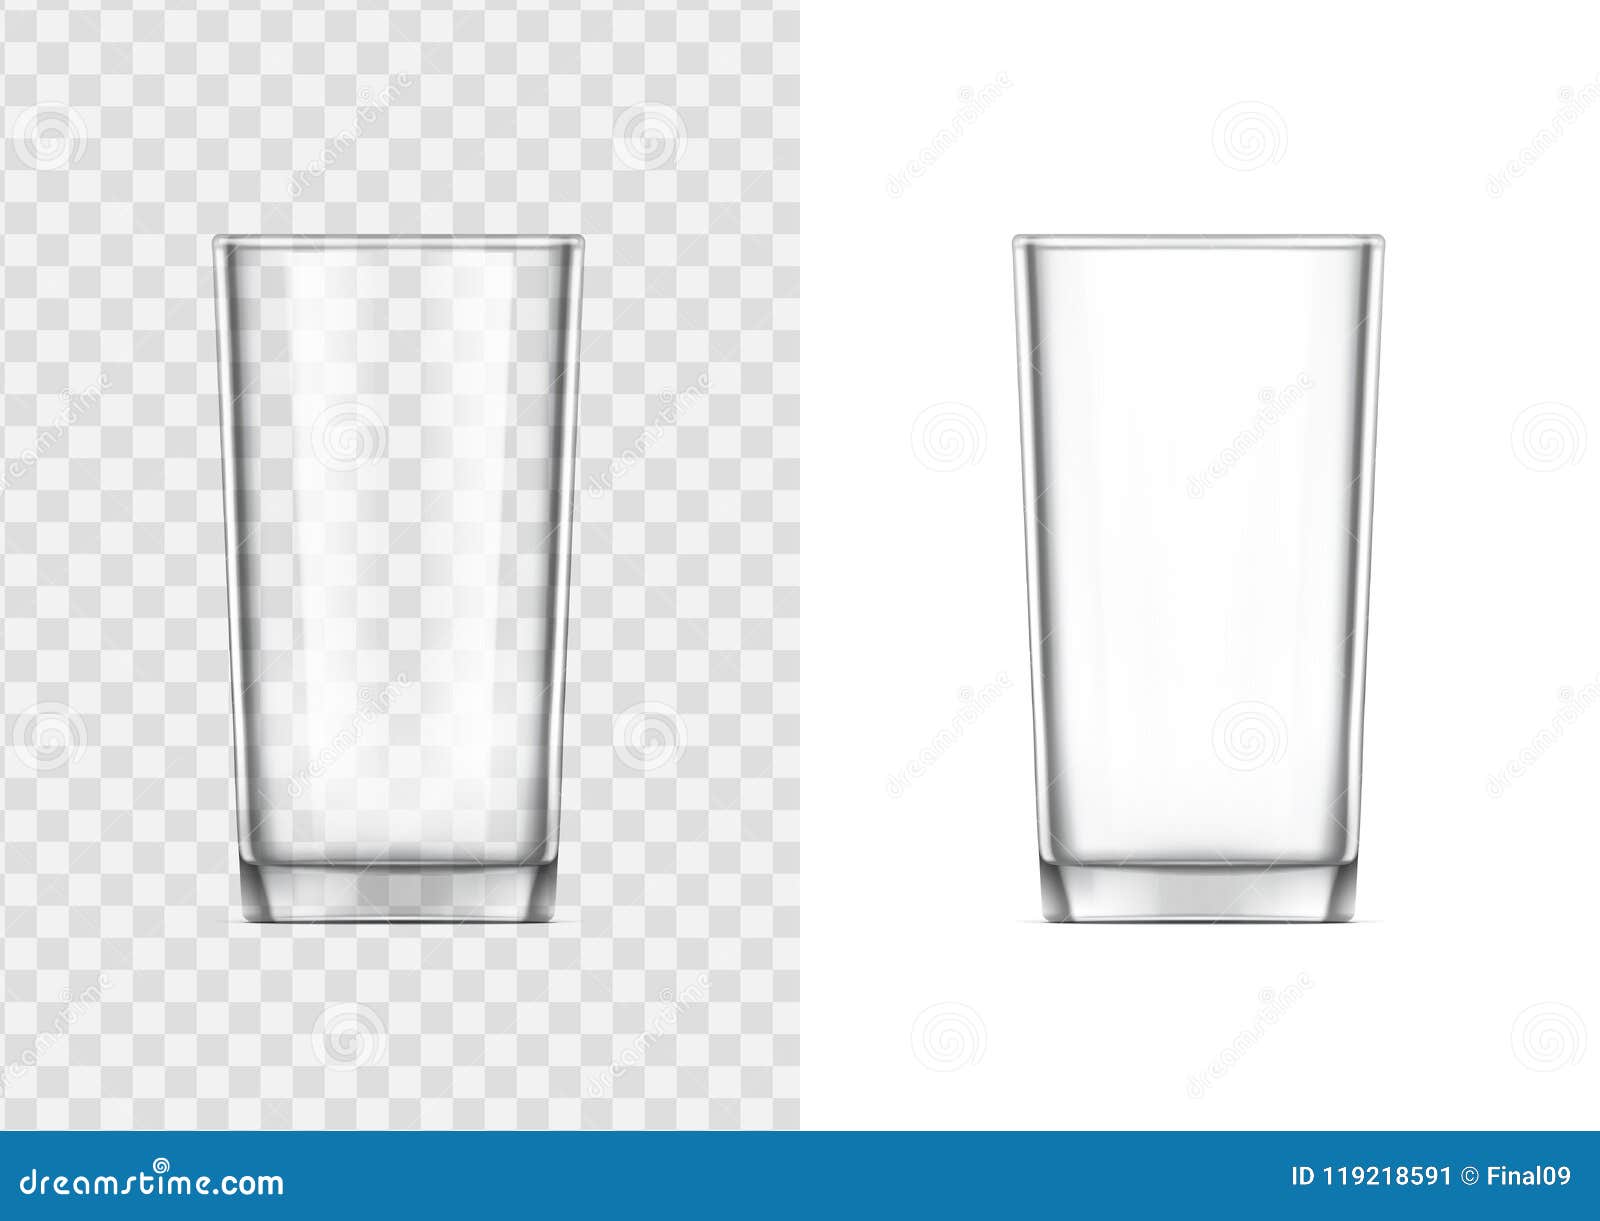 Неси пустой стакан. Пустые стаканы стеклянные прозрачные. Стеклянный стакан вектор. Посуда стеклянная на прозрачном фоне стакан. Пустой прозрачный стакан.